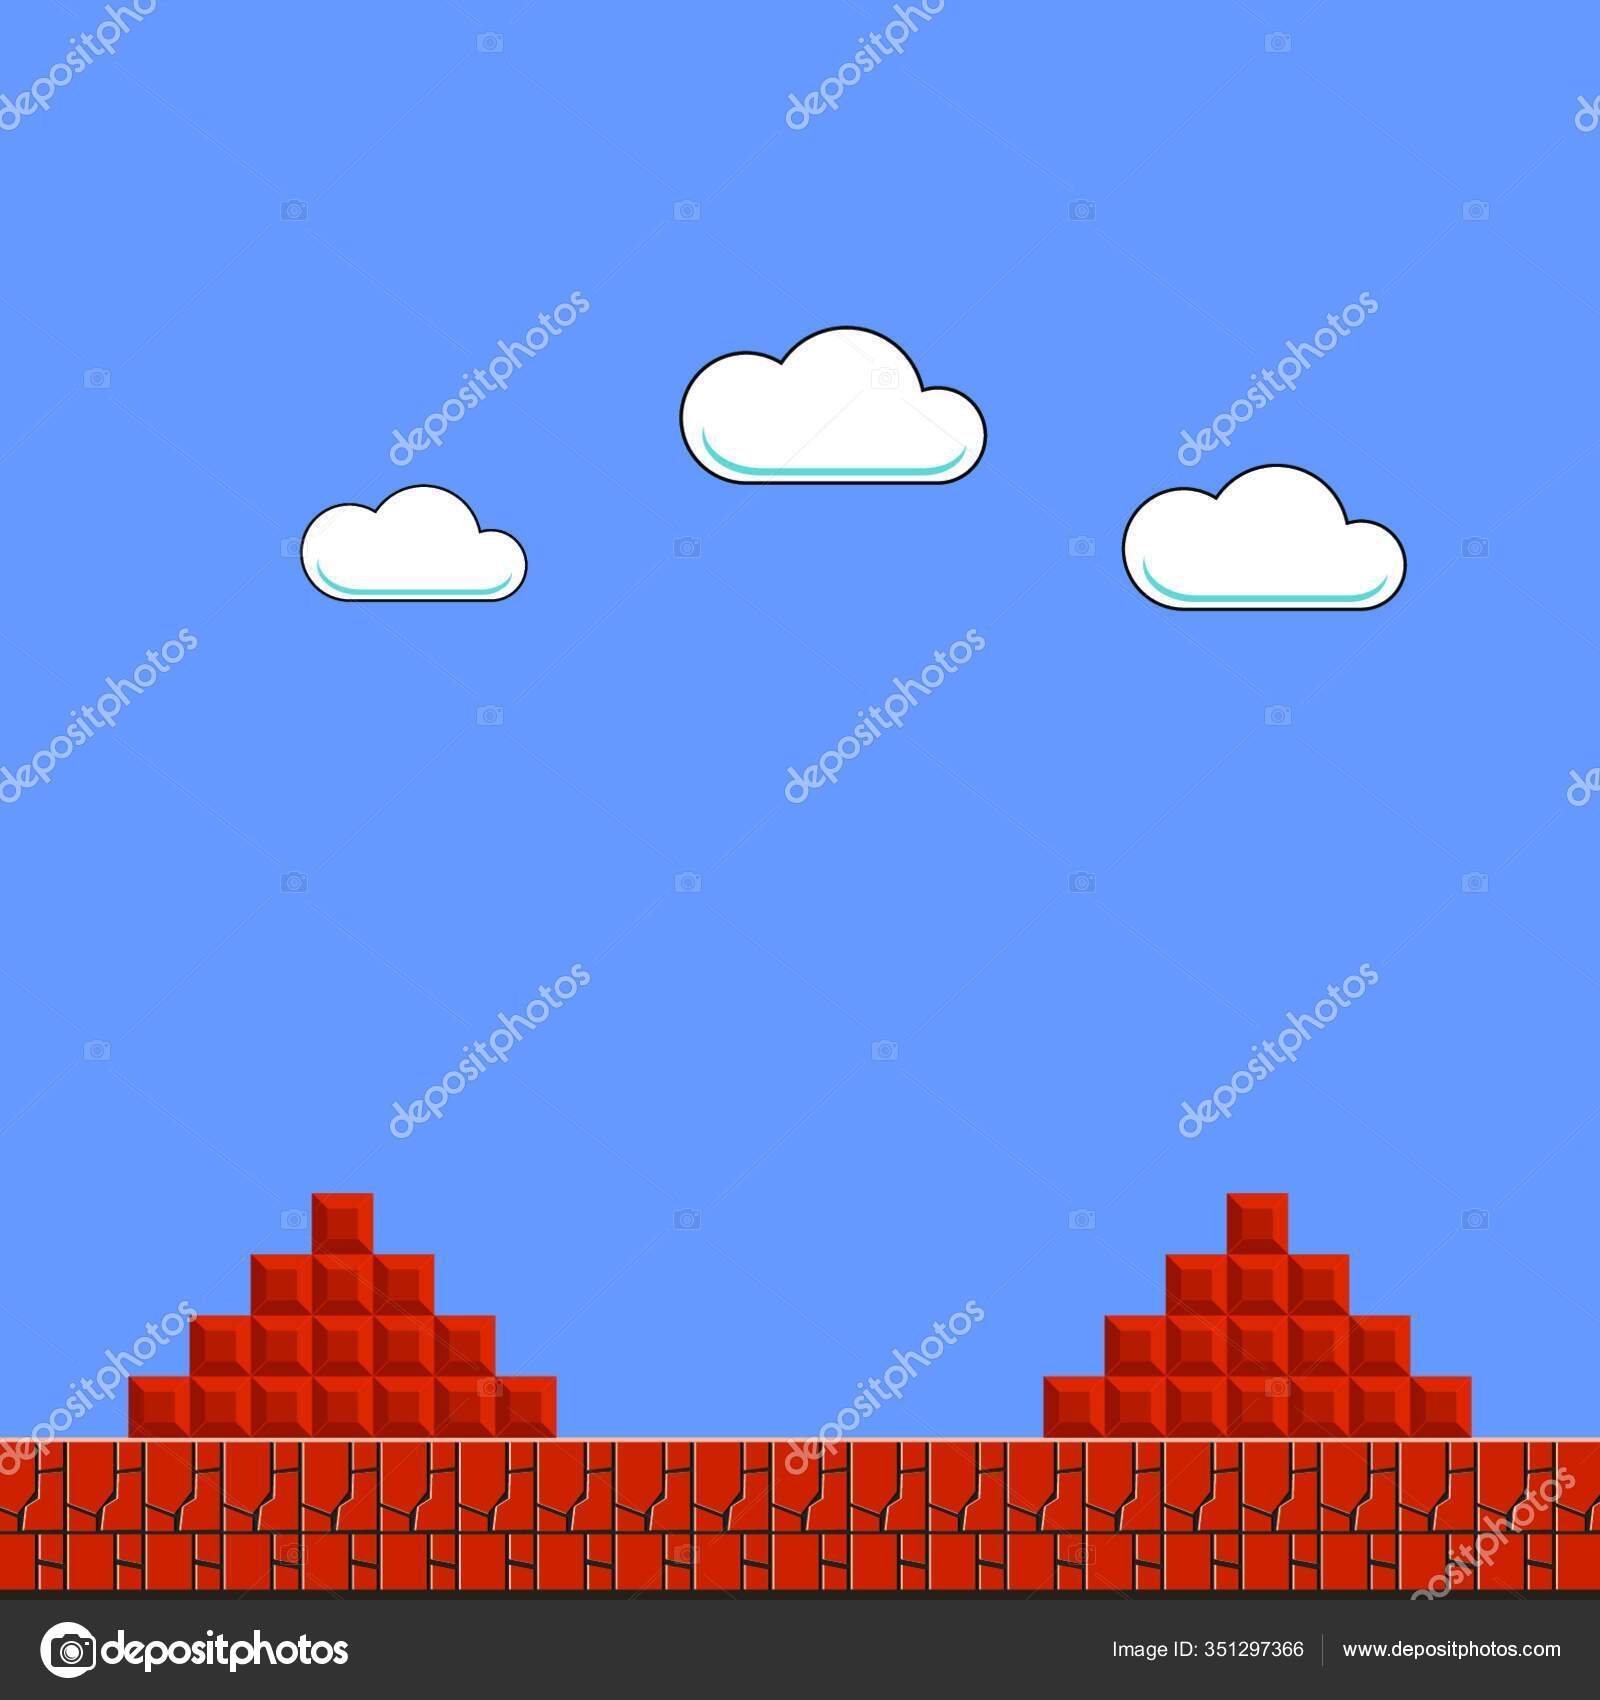 Featured image of post Retro Mario Wallpaper Classic retro style game design scenery